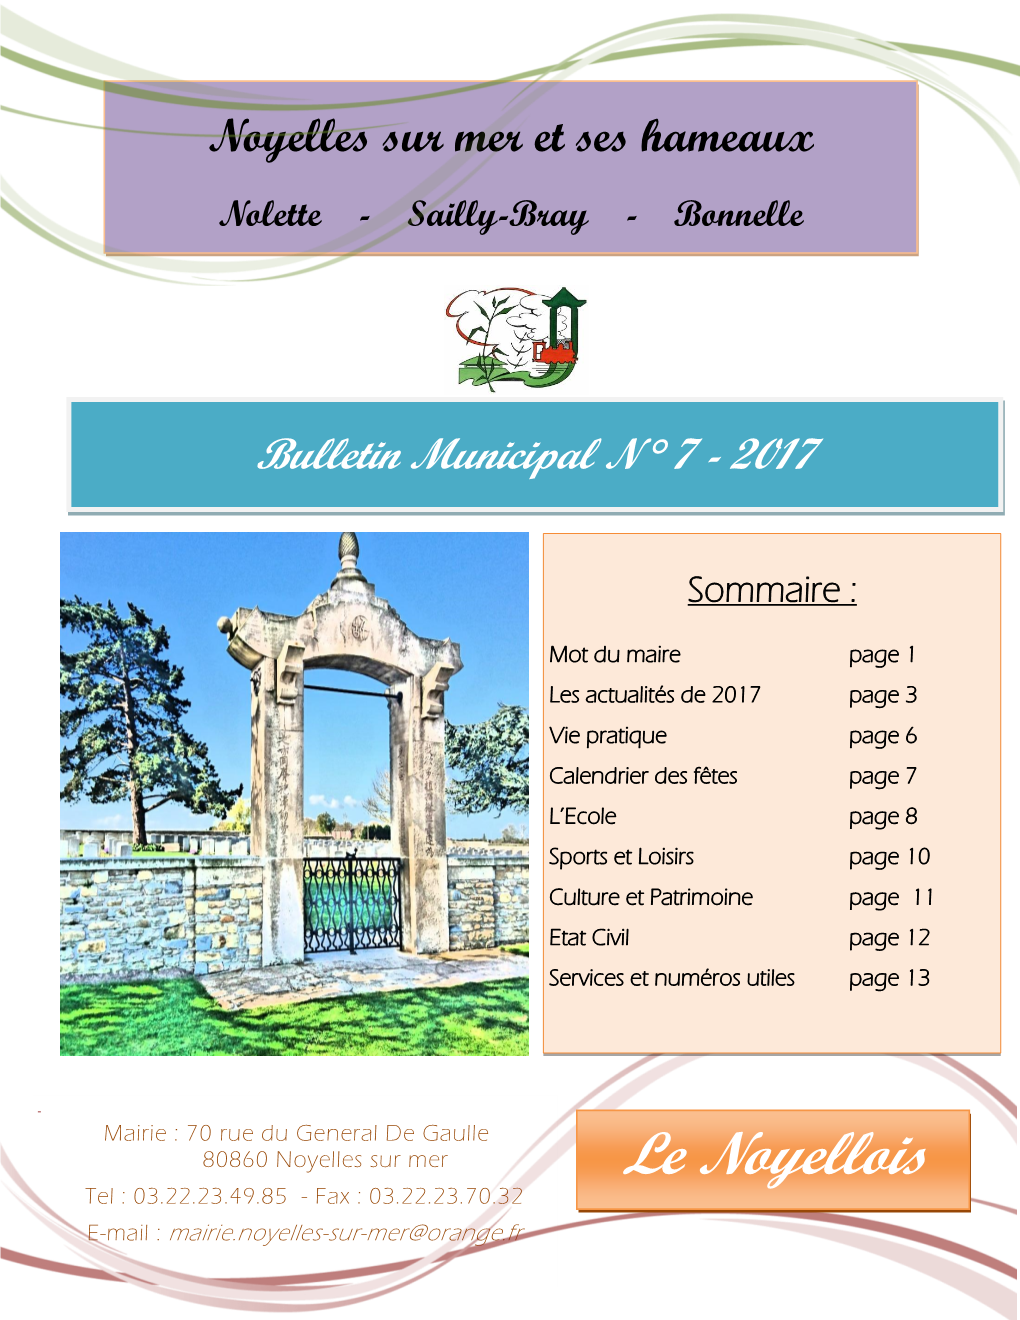 Le Noyellois Tel : 03.22.23.49.85 - Fax : 03.22.23.70.32 E-Mail : Mairie.Noyelles-Sur-Mer@Orange.Fr